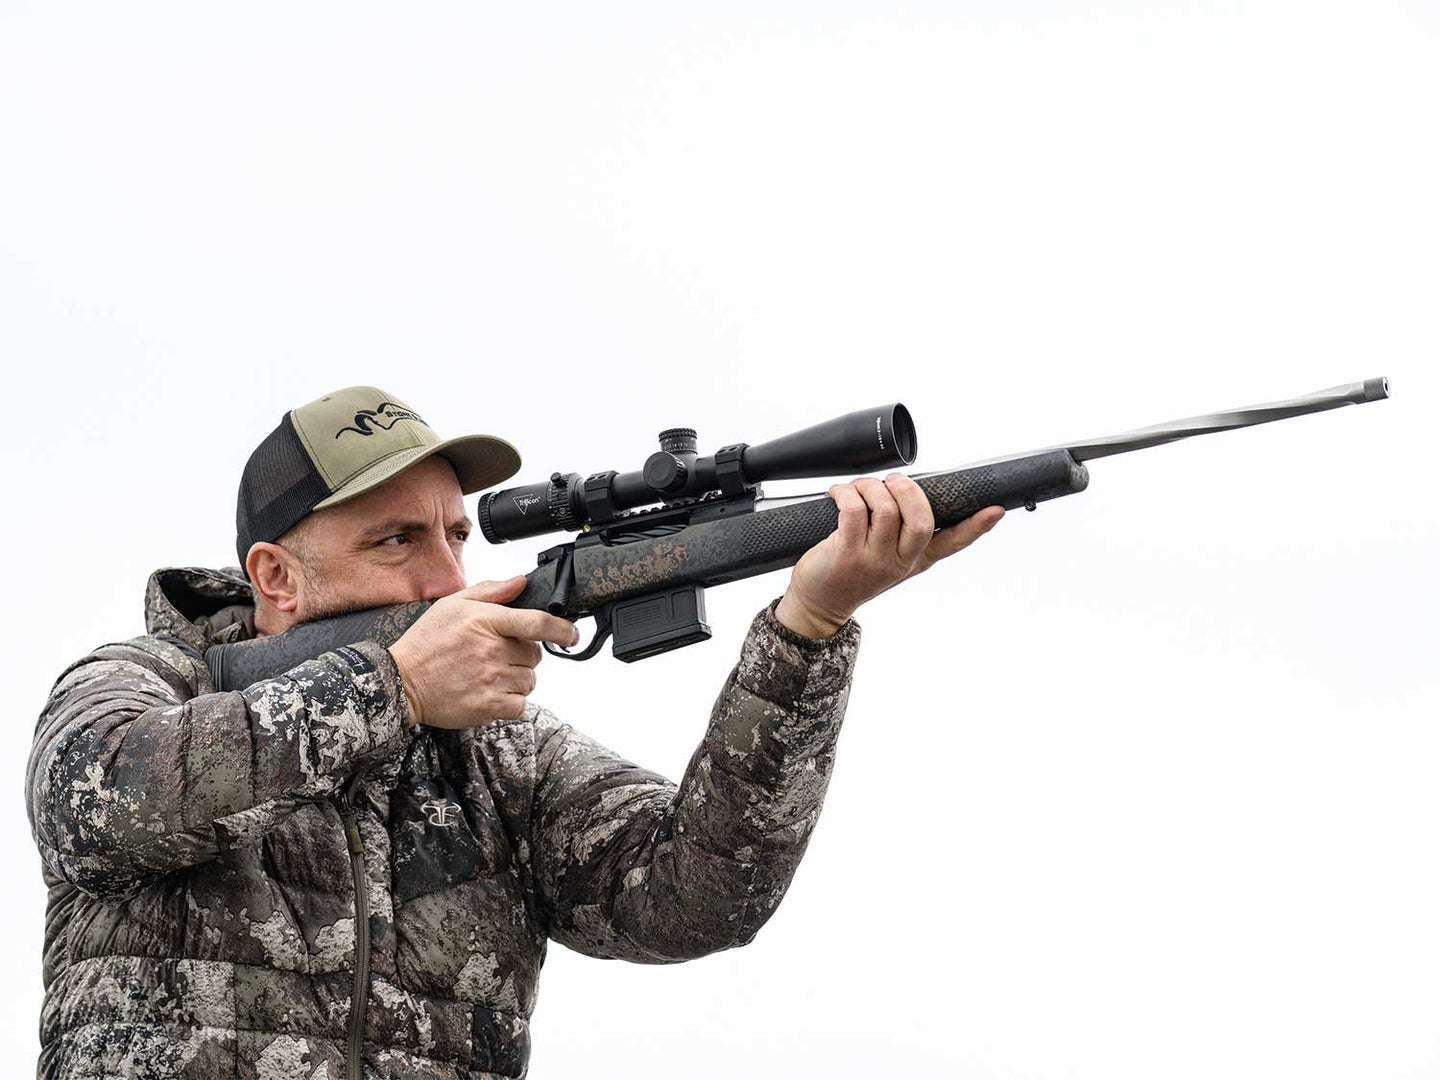 An author aiming a custom Lapua rifle with a scope.